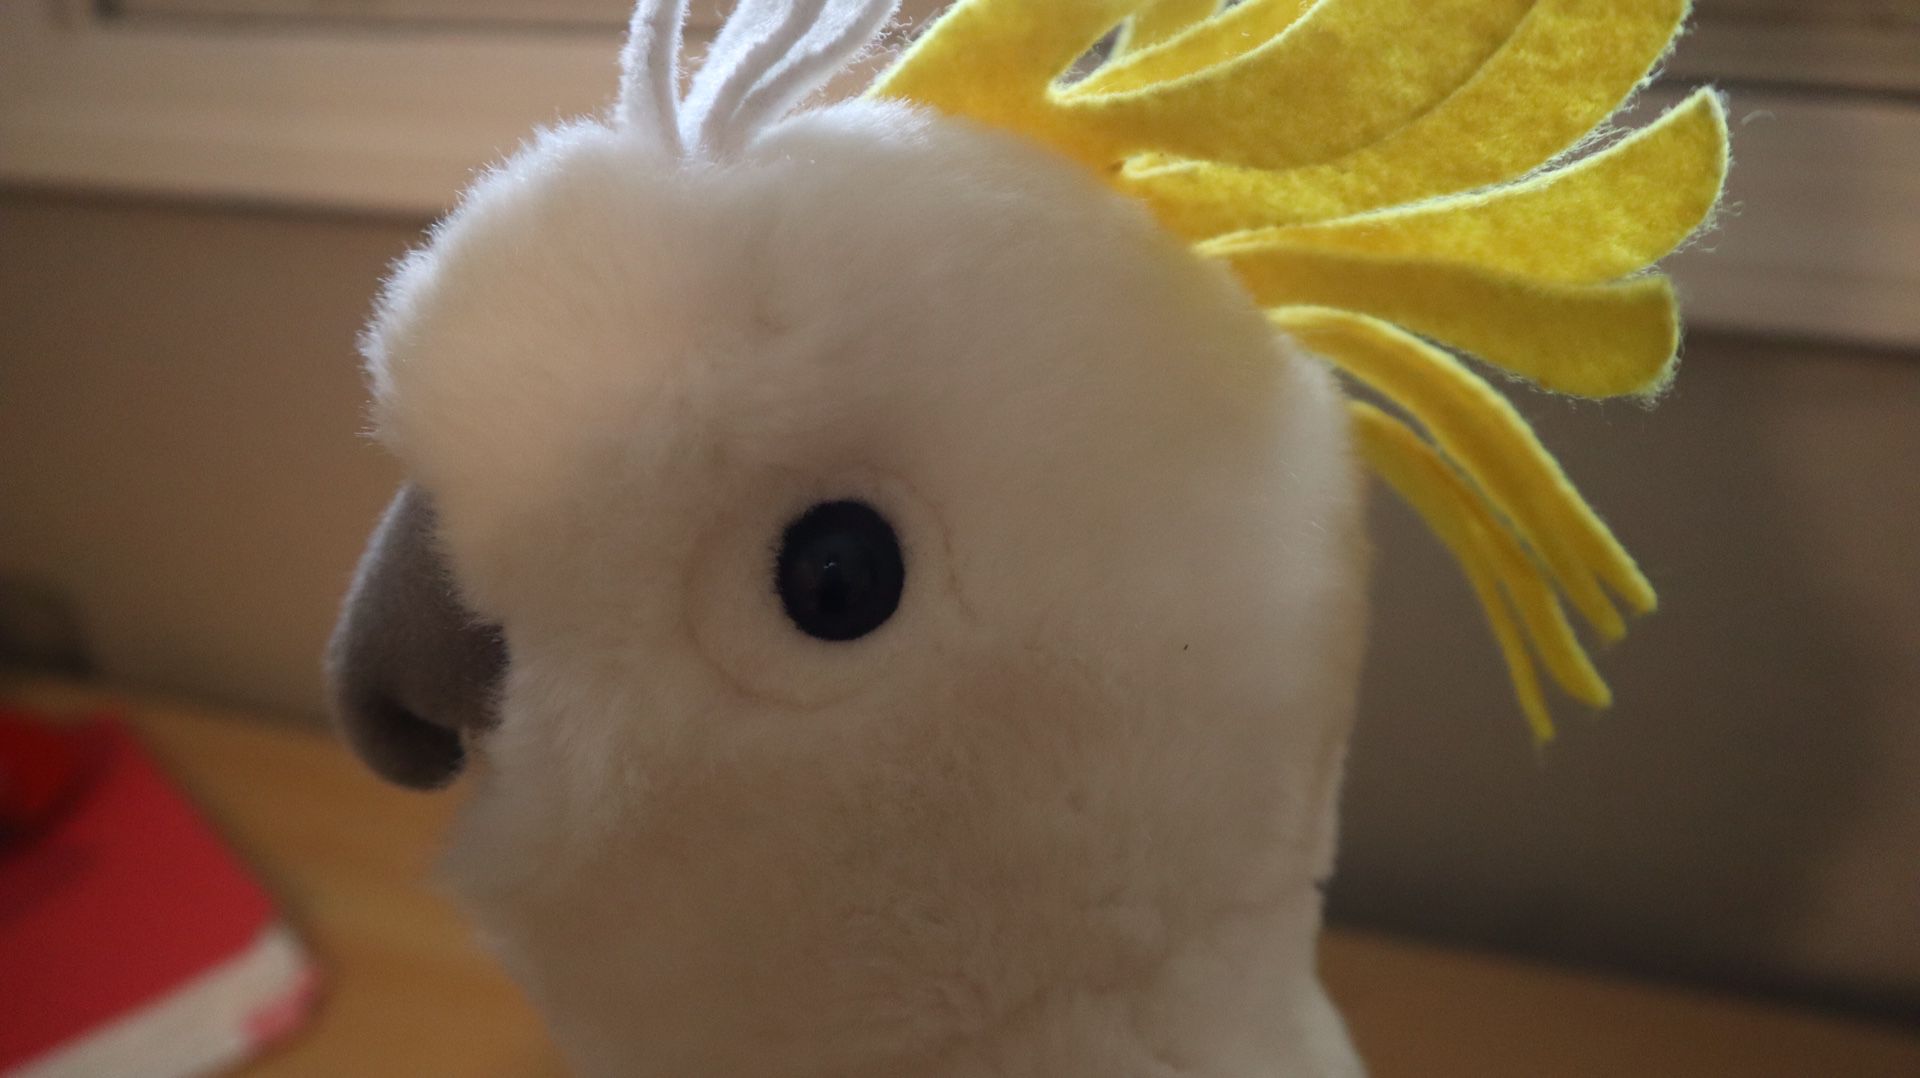 Bird stuffed animal